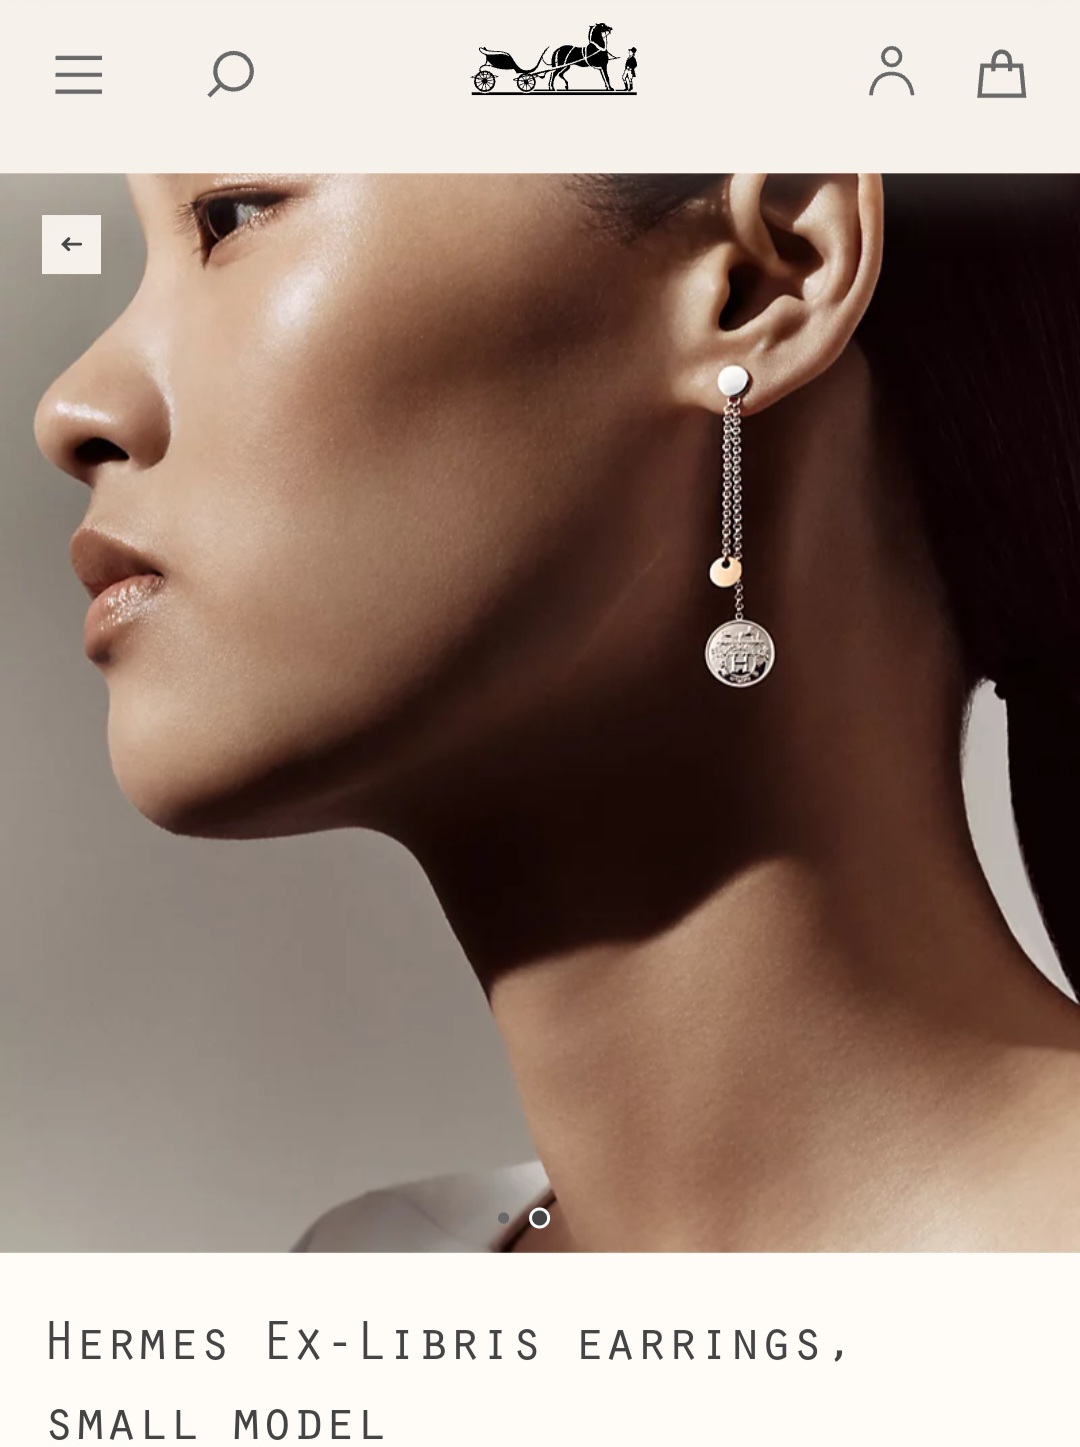 Hermes Ex-Libris earrings, small model earrings